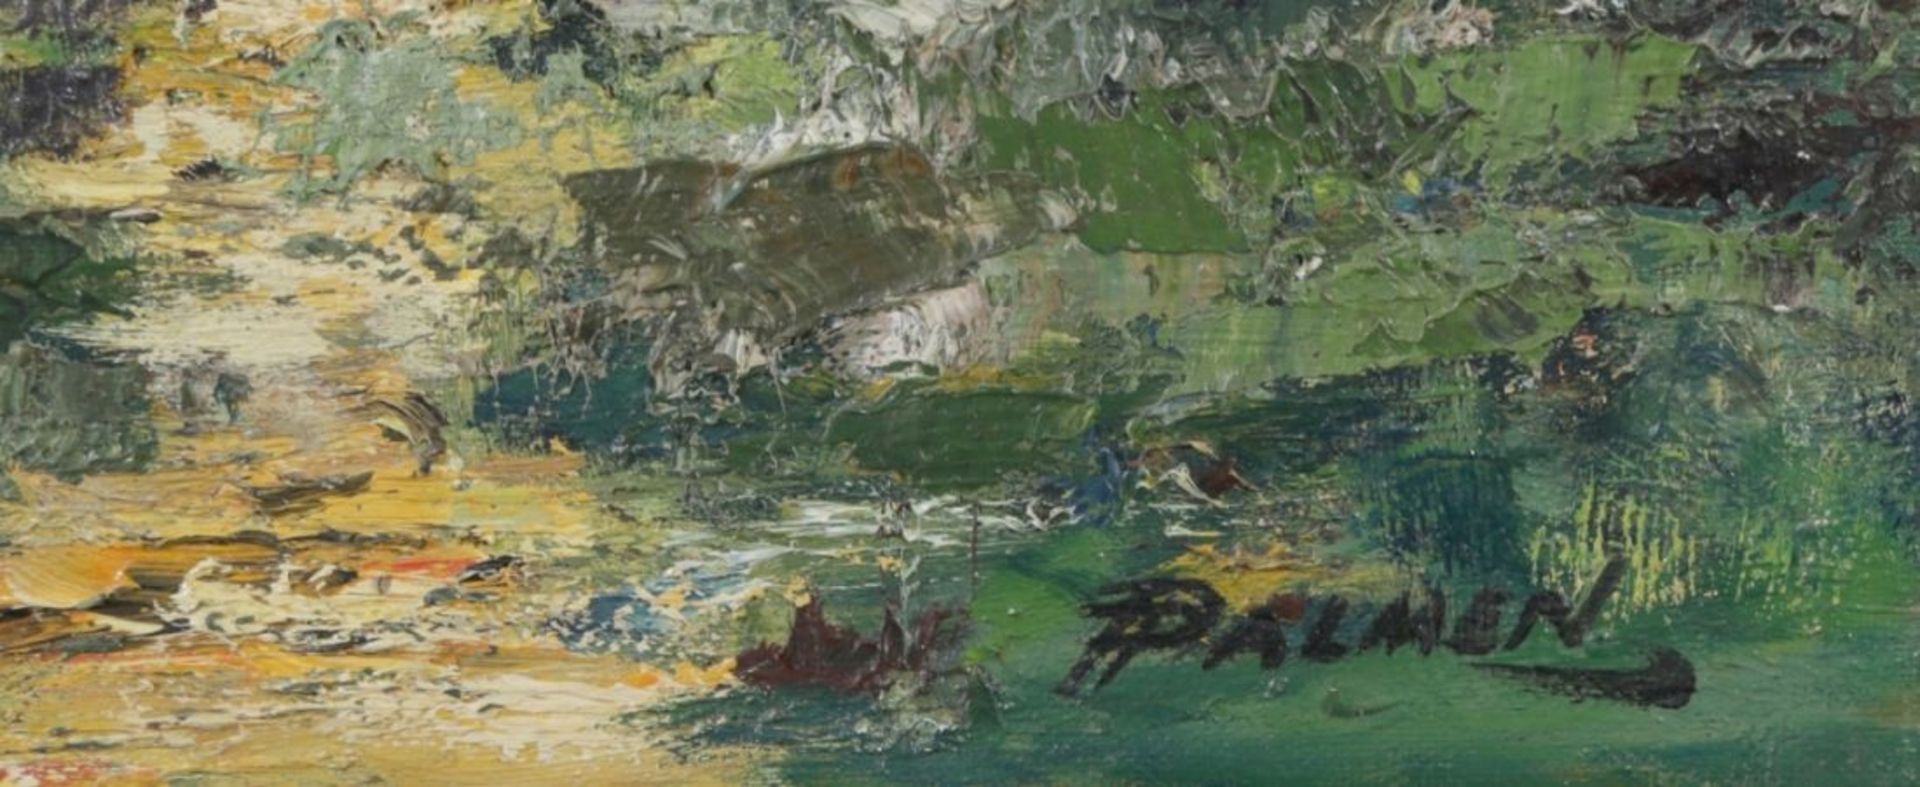 Palmen, P., Maler Mitte 20. Jh. "Gebirgshof", sign., Öl/Lw., 50 x 60 cm - Bild 2 aus 2